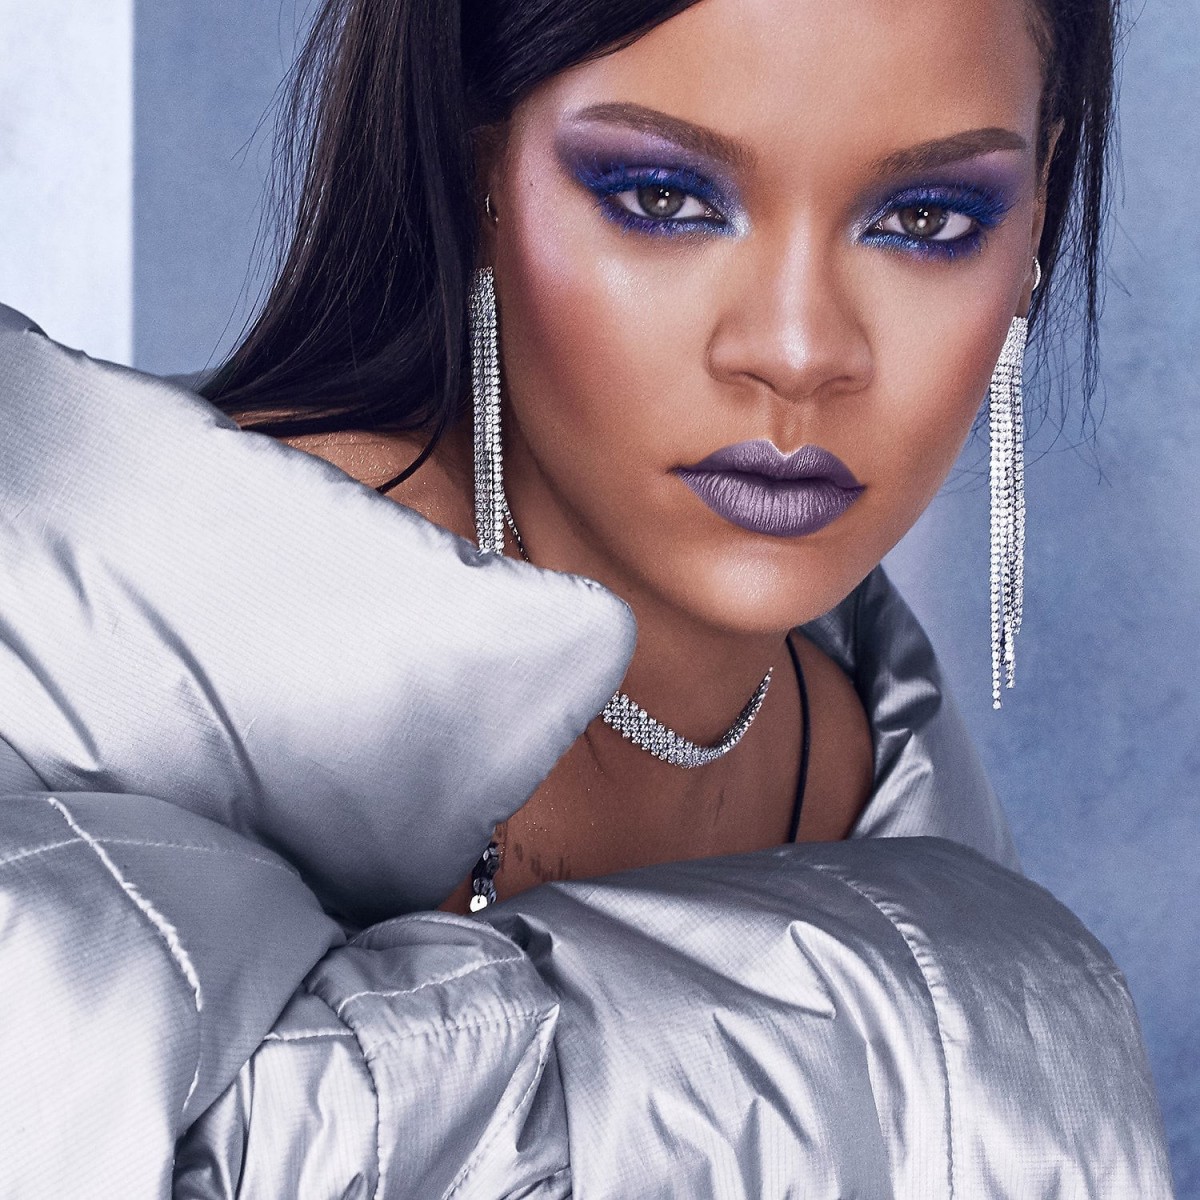 Rihanna photo 7718 of 9261 pics, wallpaper - photo #1072898 - ThePlace2